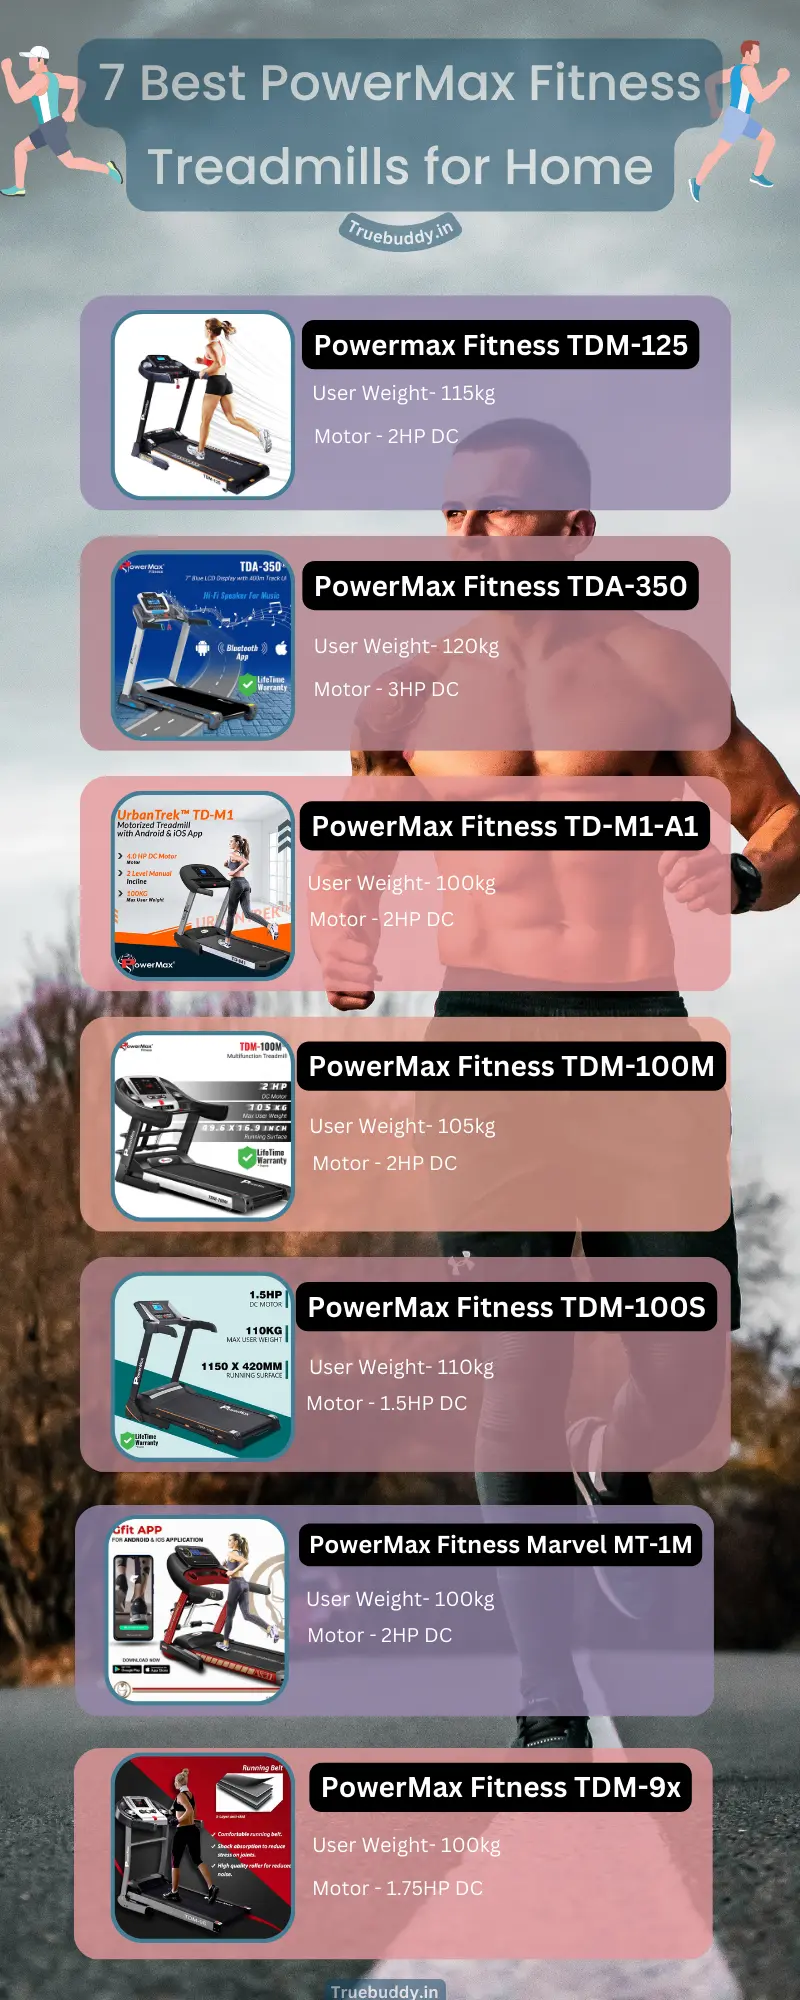 PowerMax Fitness Treadmills for Home Exercise